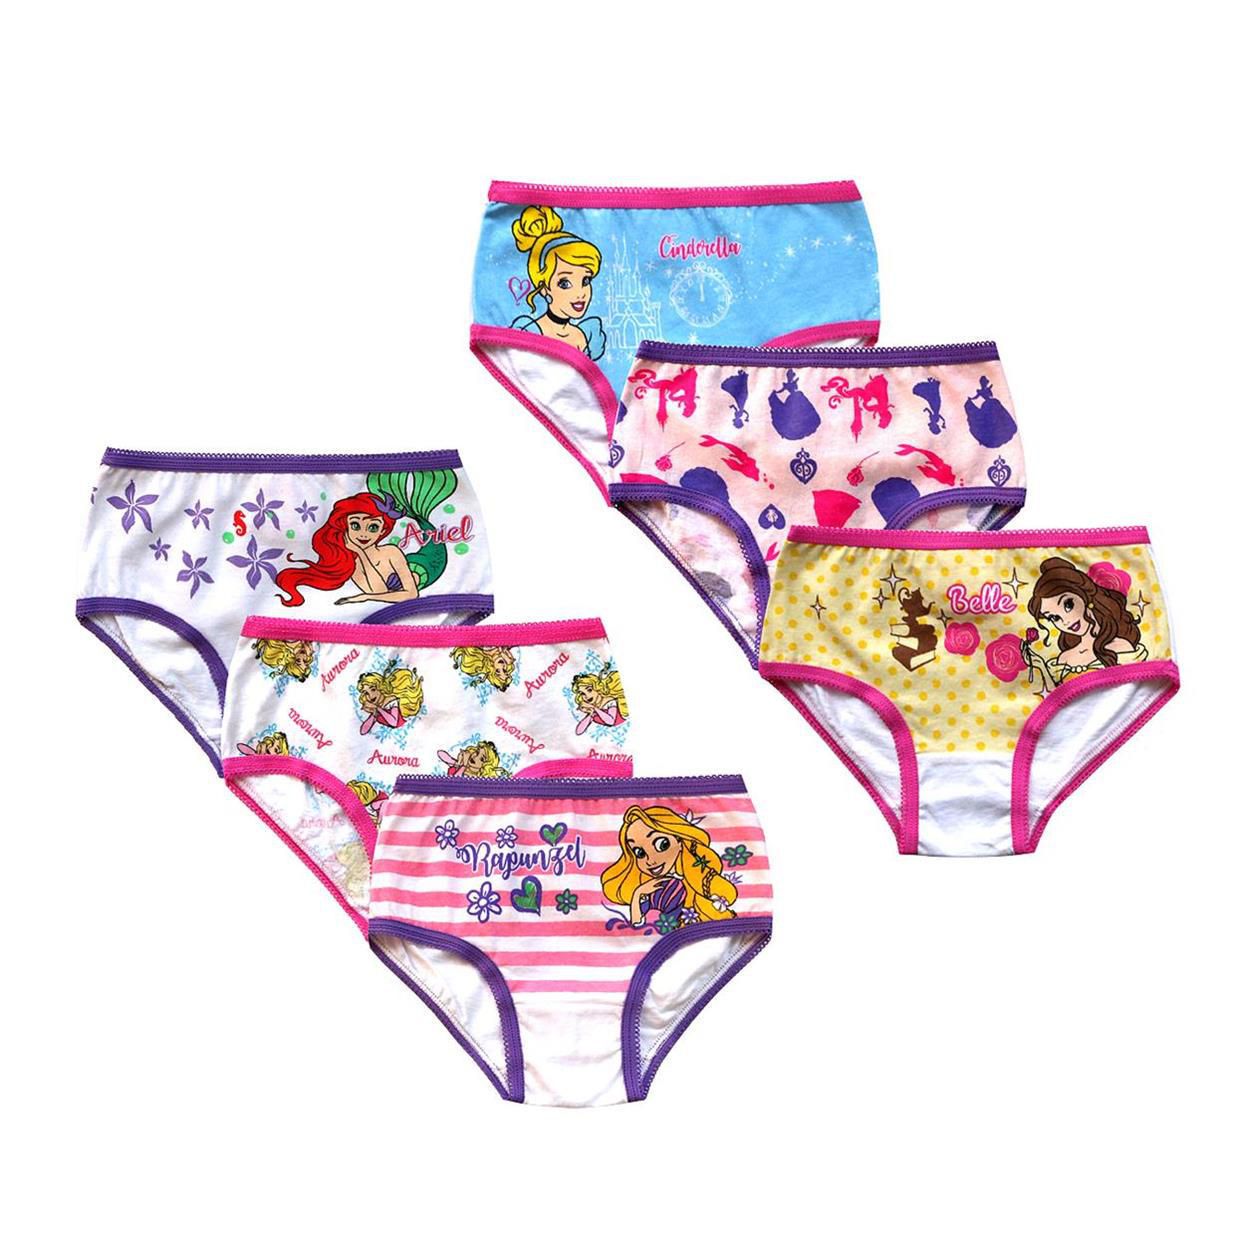  JELEUON 4 Pcs Little Girls Toddler Kids Ballet Princess  Underwear Boxers Briefs Panties